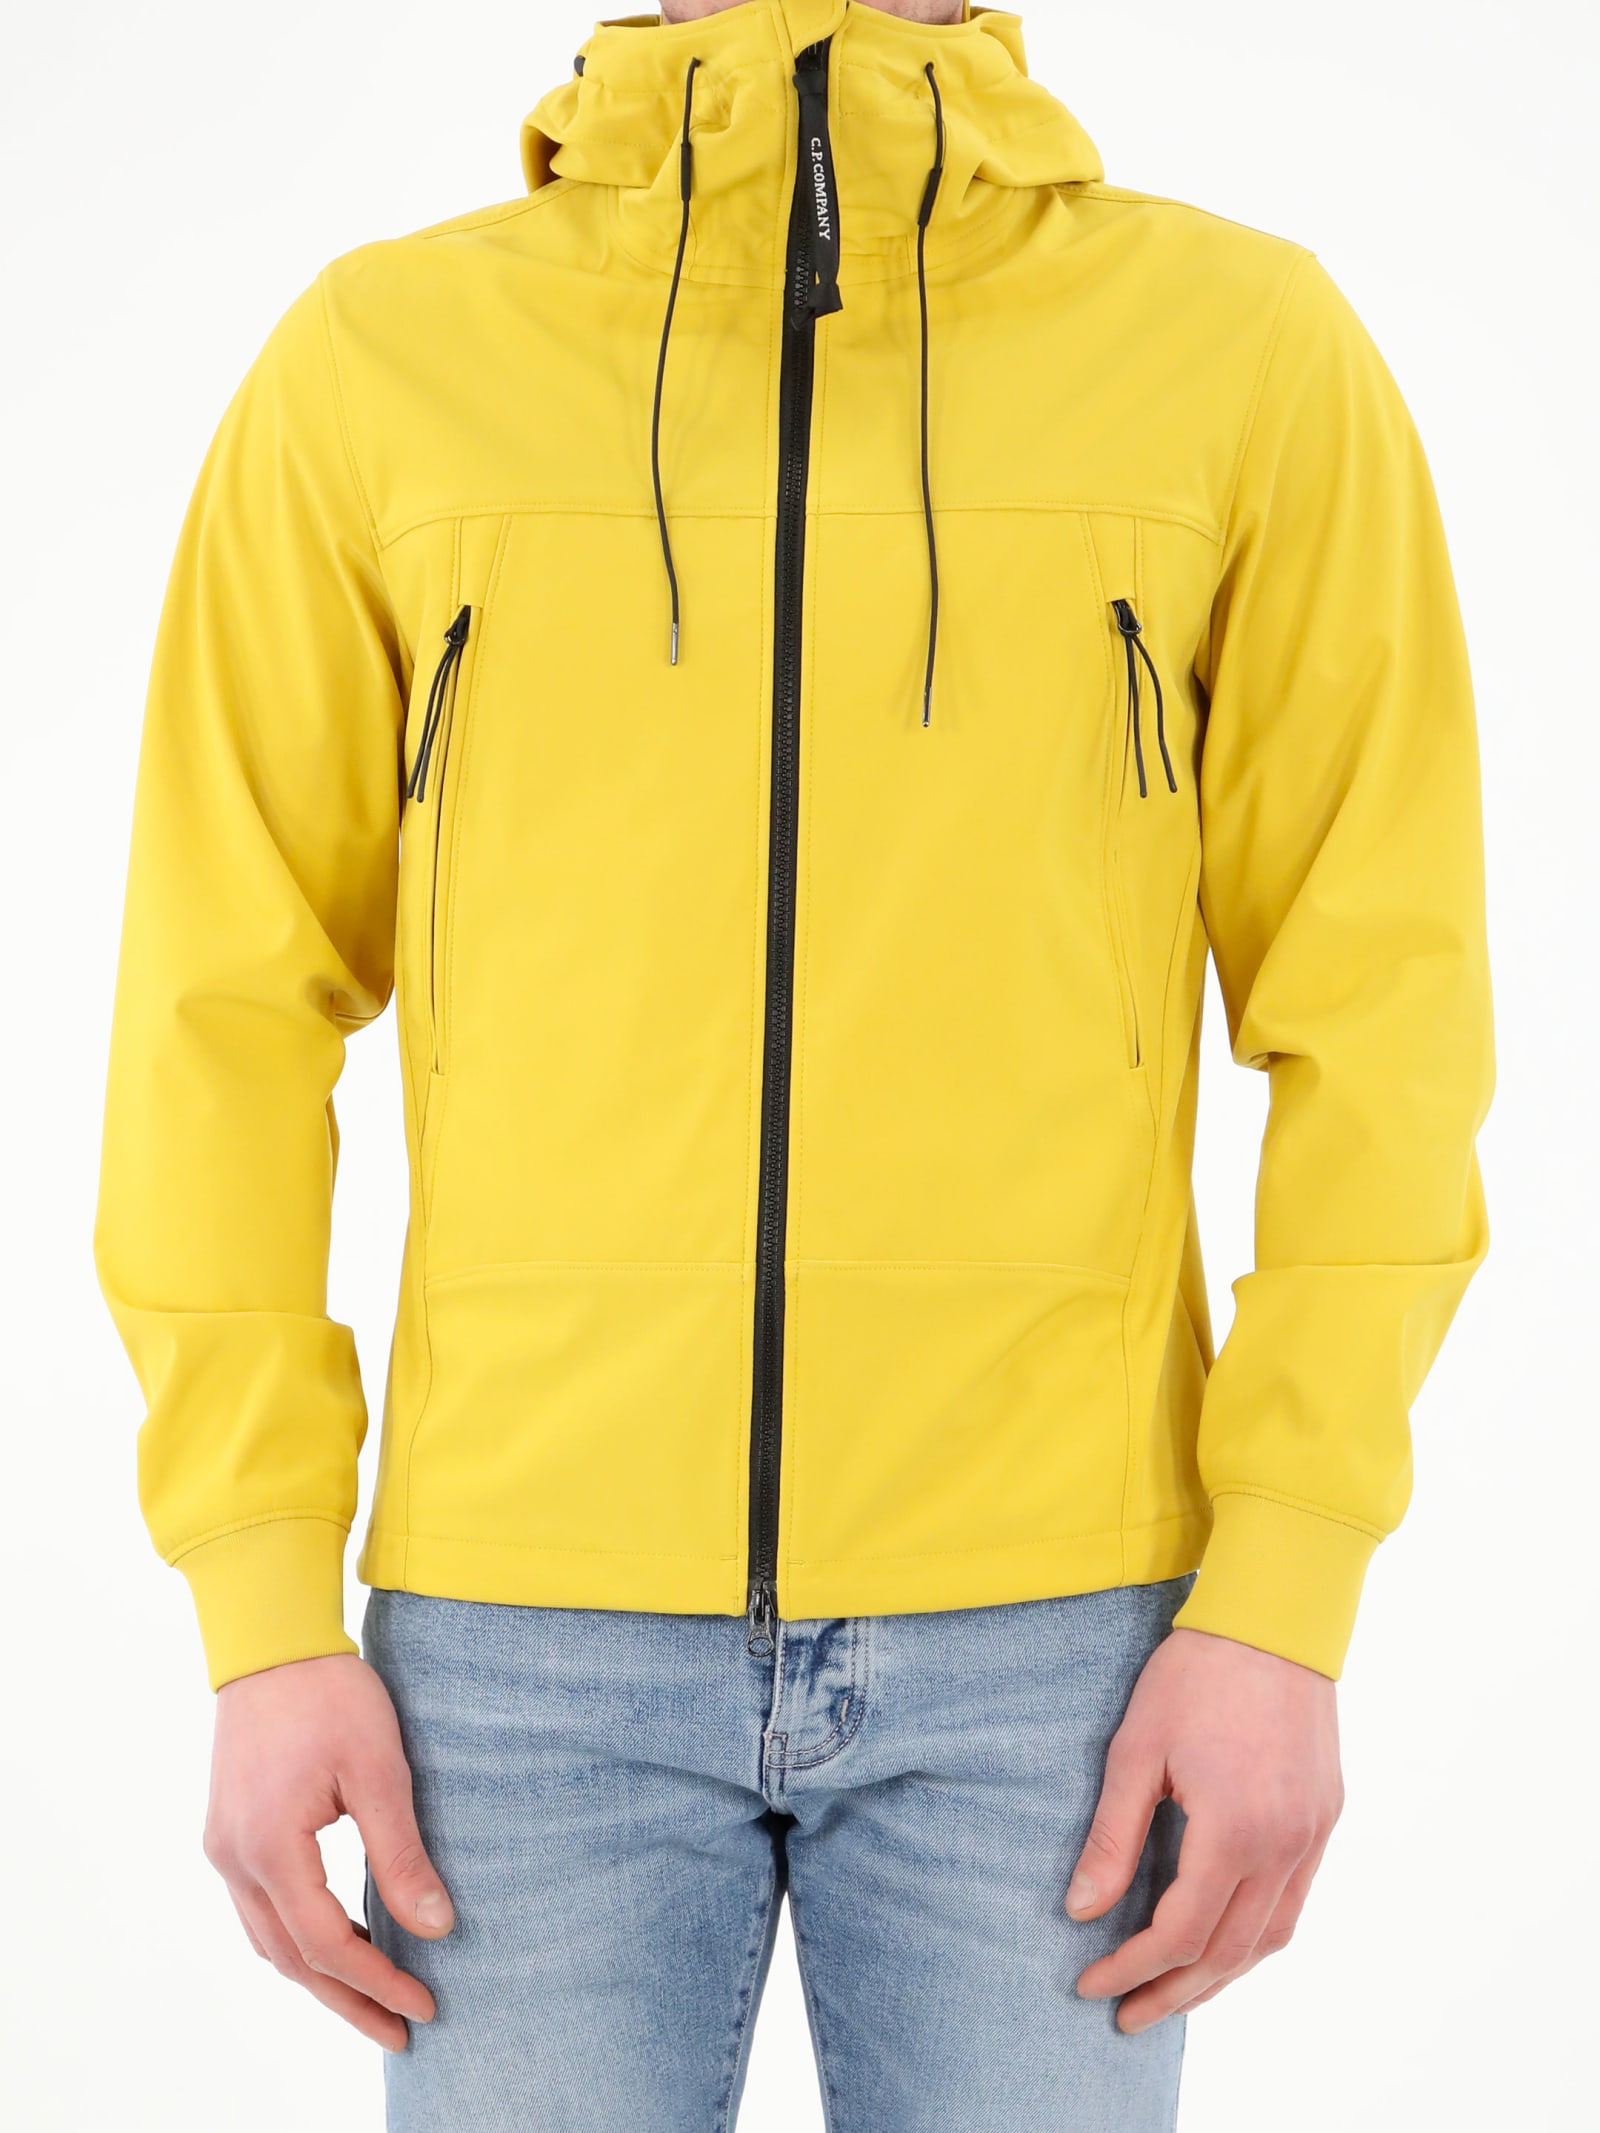 C.P. Company Soft Shell Yellow Jacket